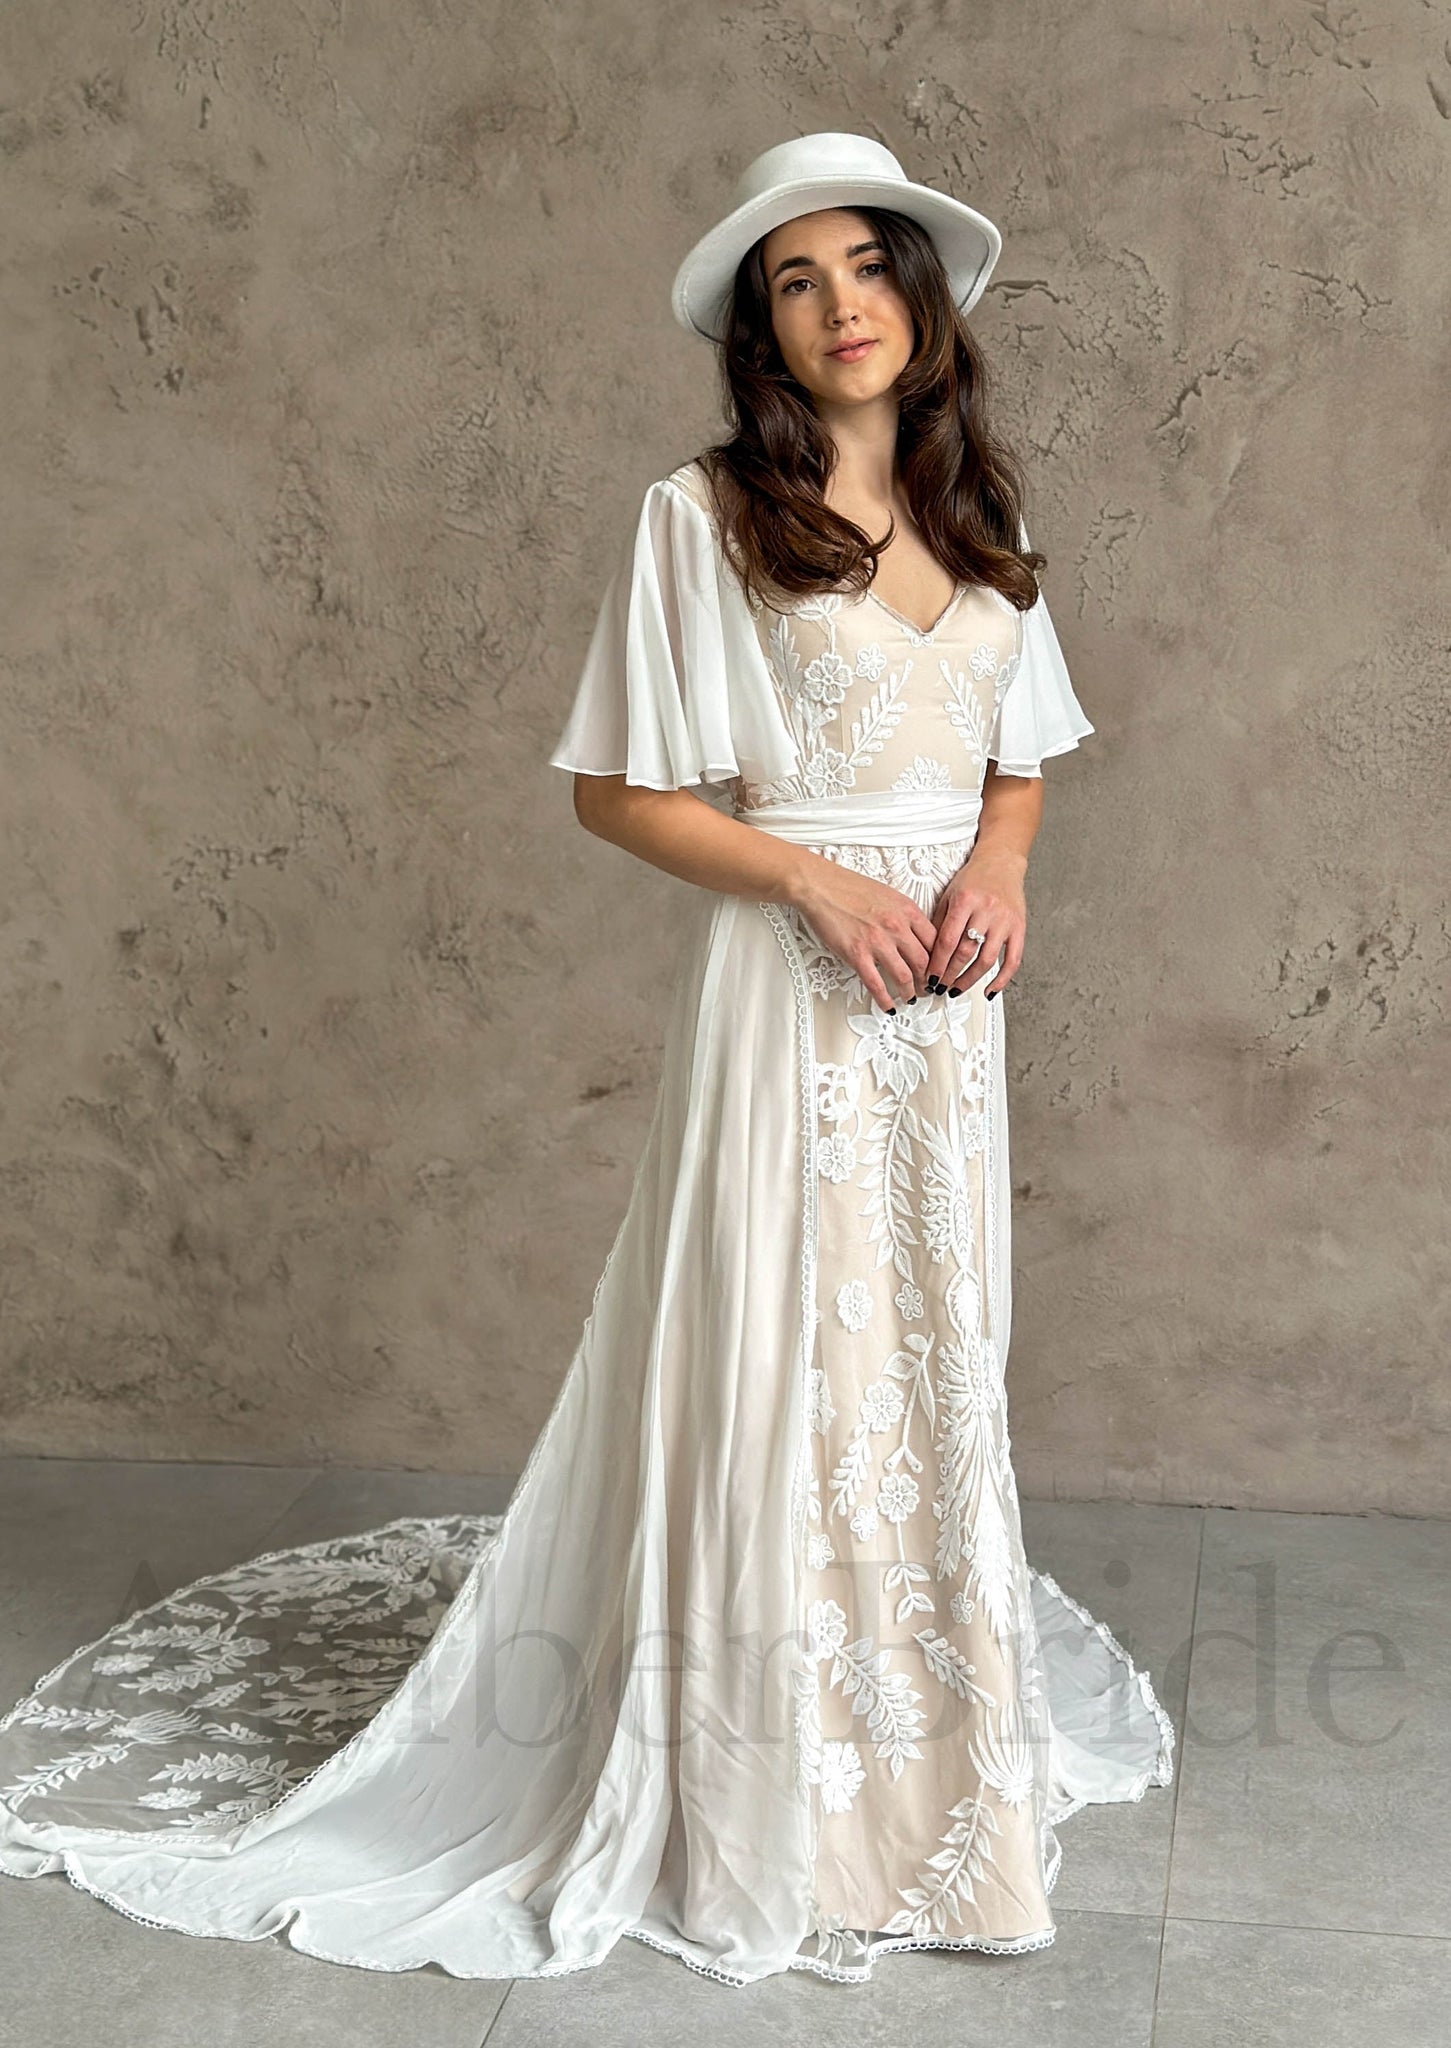 Boho A-Line Chiffon Wedding Dress with Lace Flowers, Cape Sleeve and Backless Design